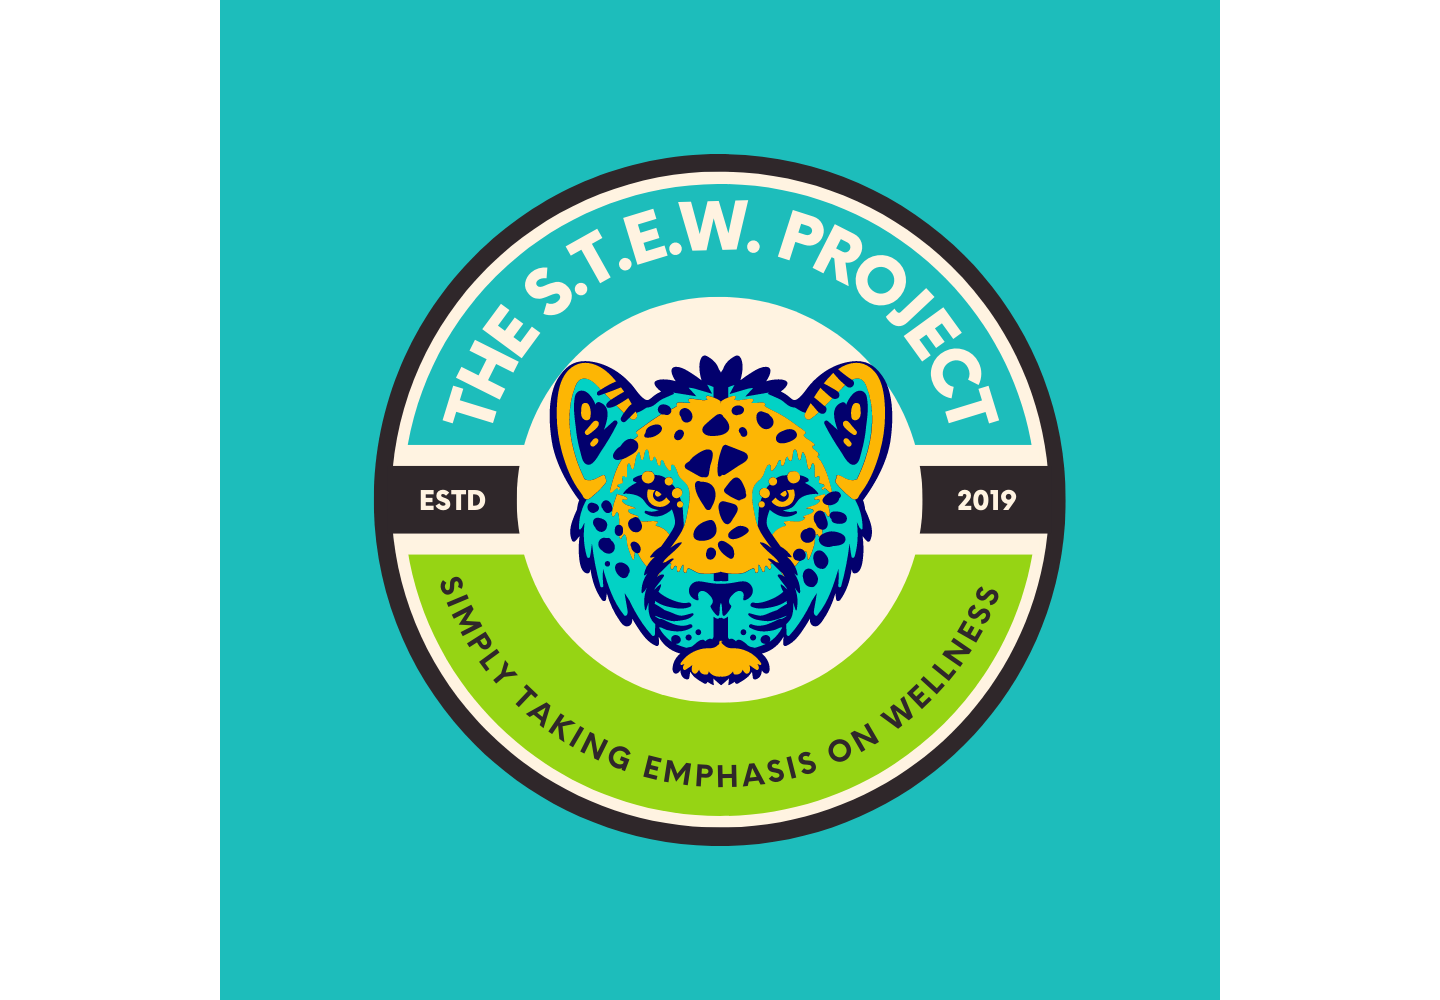 Improve Your Health - The S.T.E.W. Project